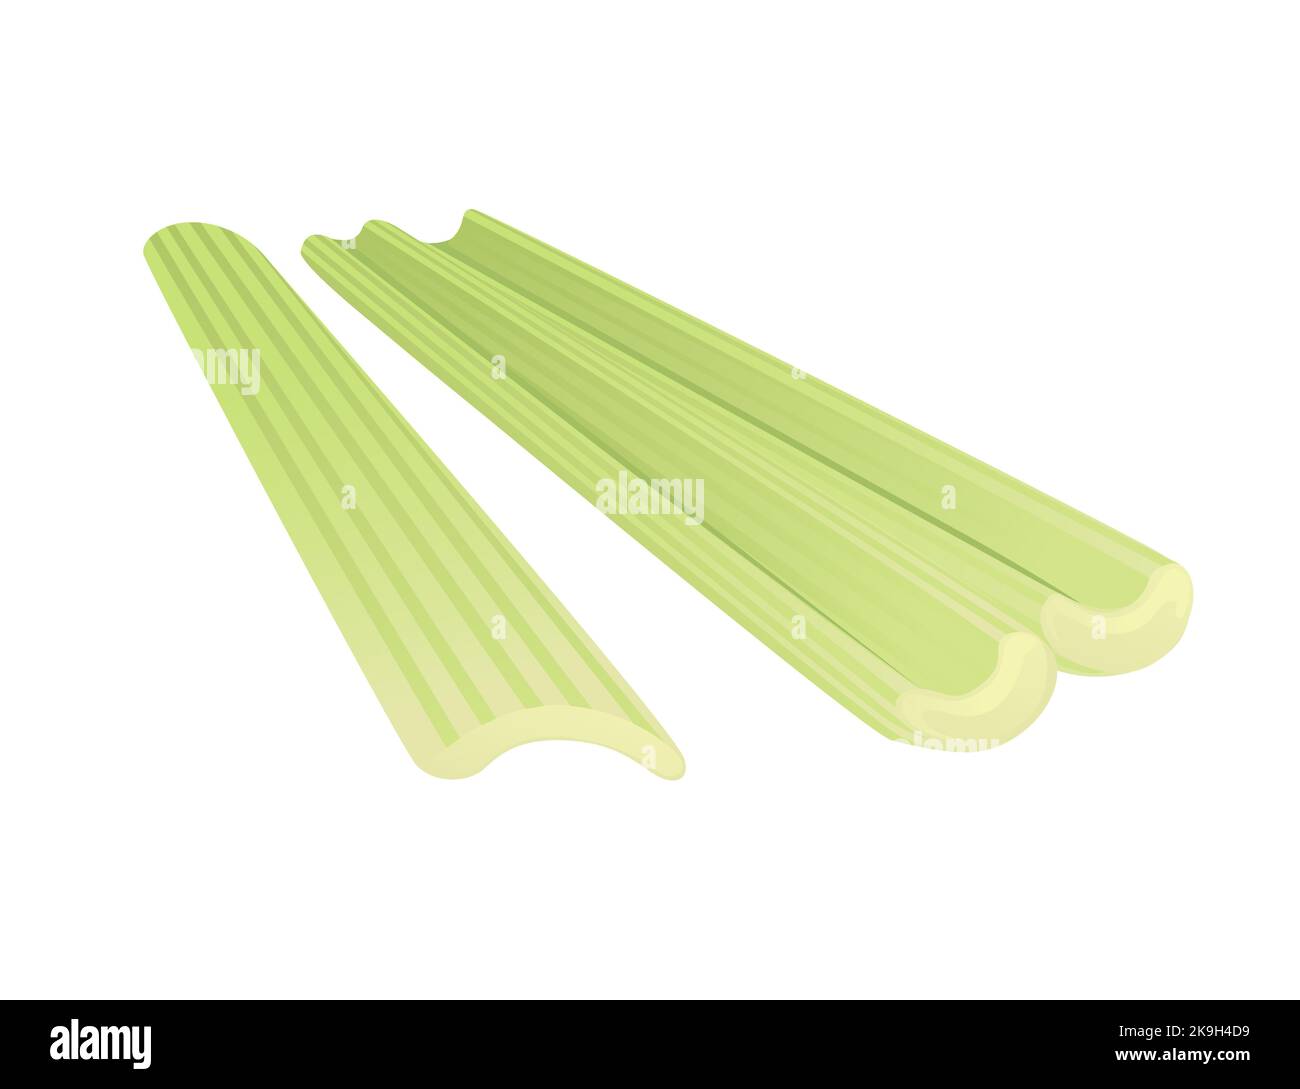 Celery green stem cartoon vegetable plant vector illustration isolated on white background Stock Vector